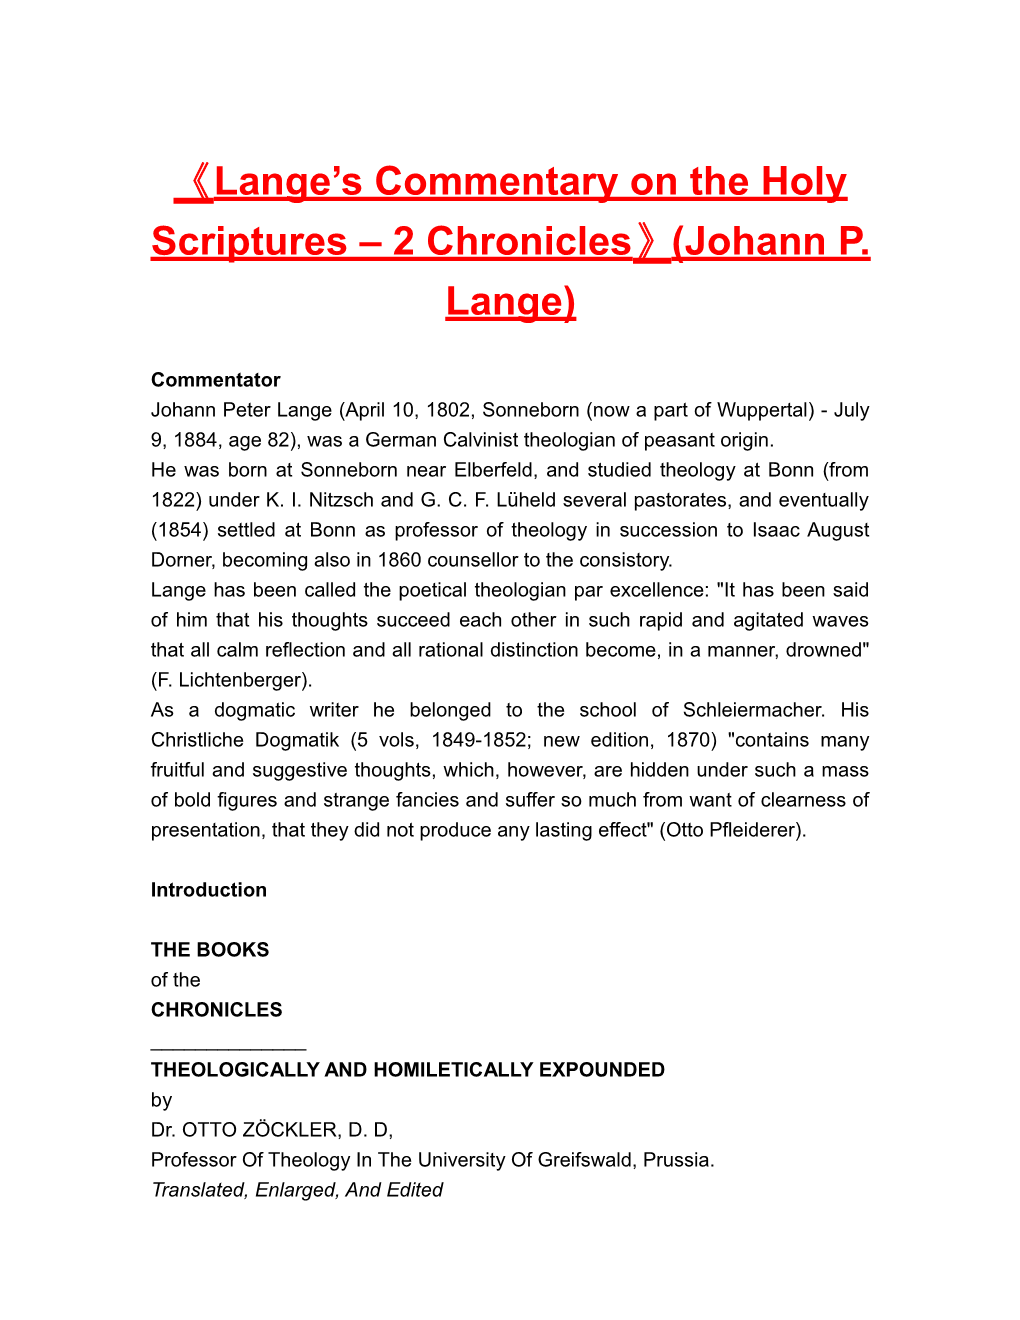 Lange S Commentary on the Holyscriptures 2 Chronicles (Johann P. Lange)